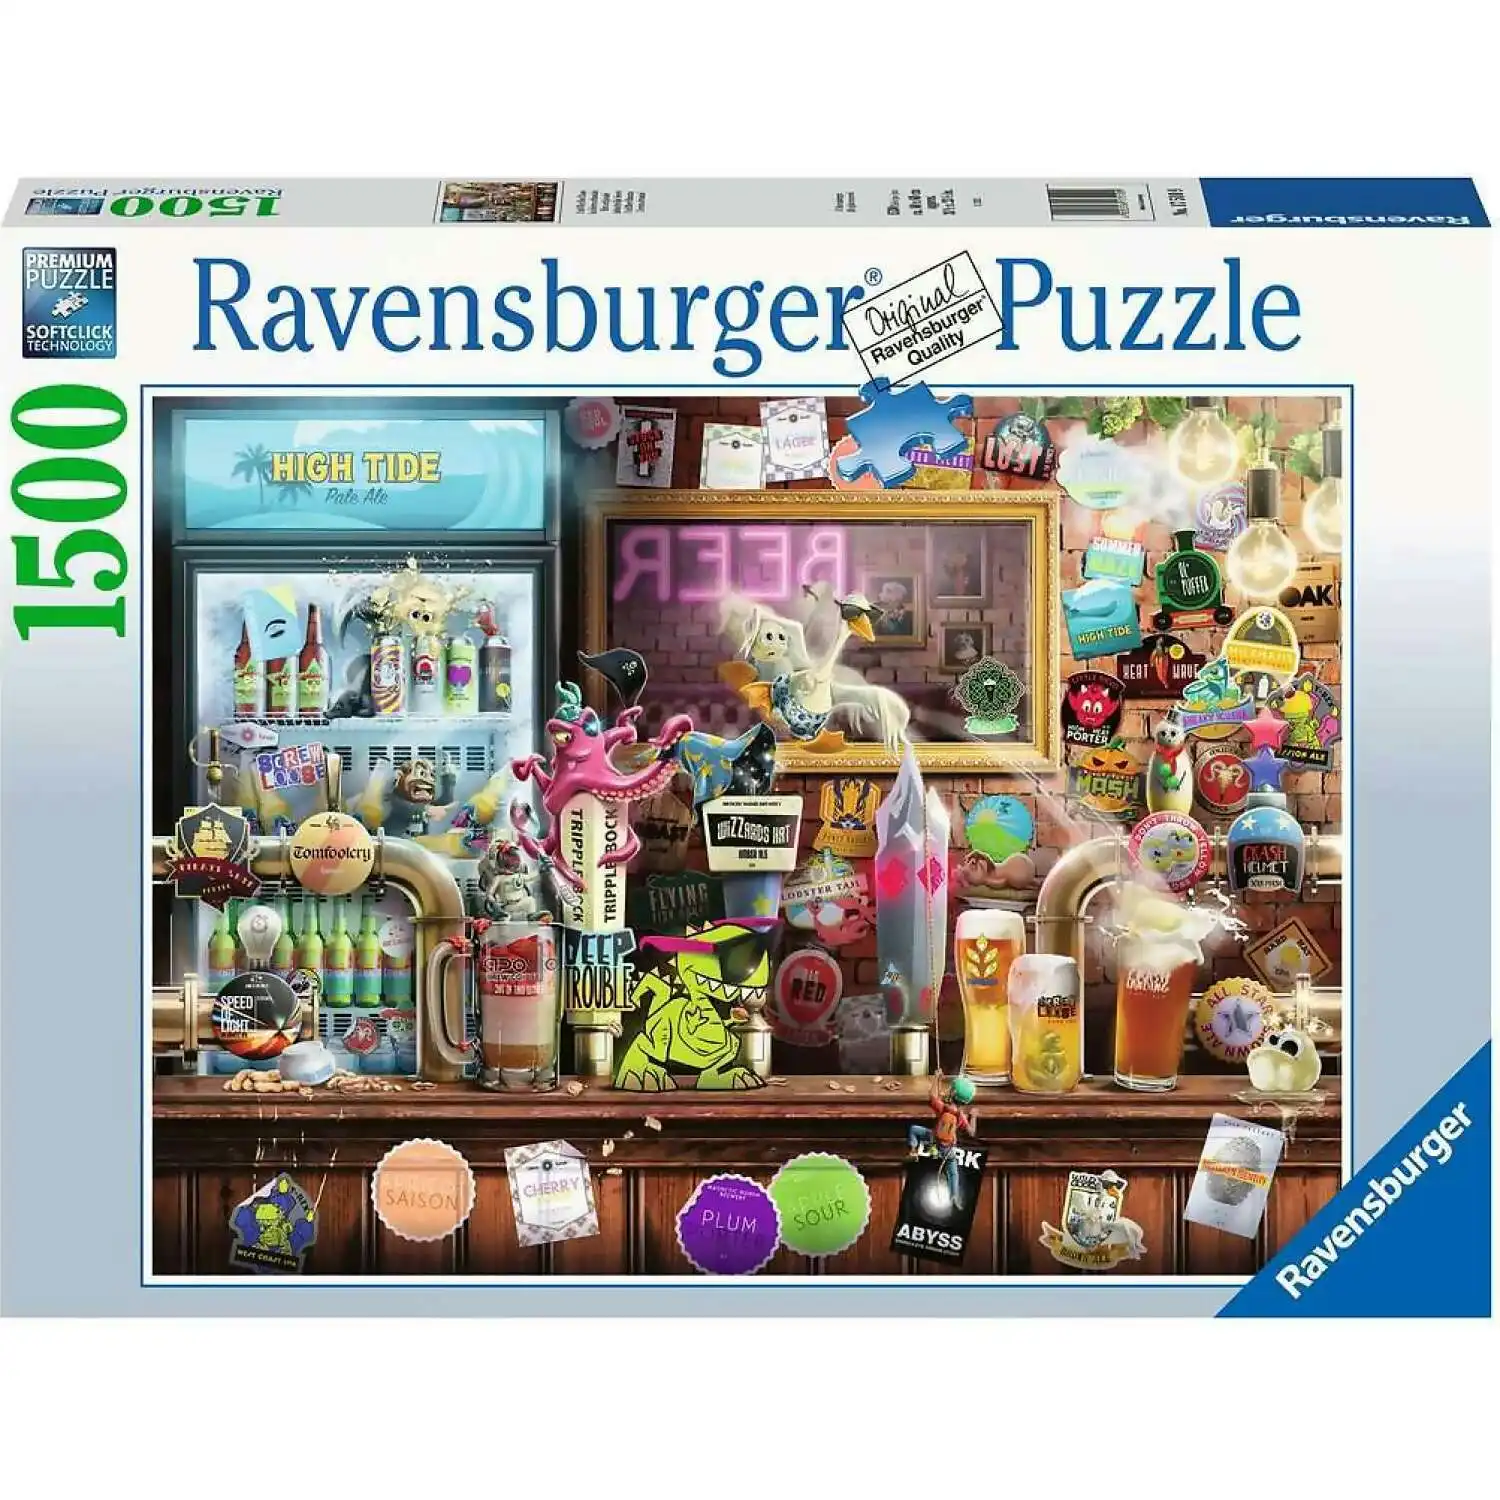 Ravensburger - Craft Beer Bonanza Jigsaw Puzzle 1500pc